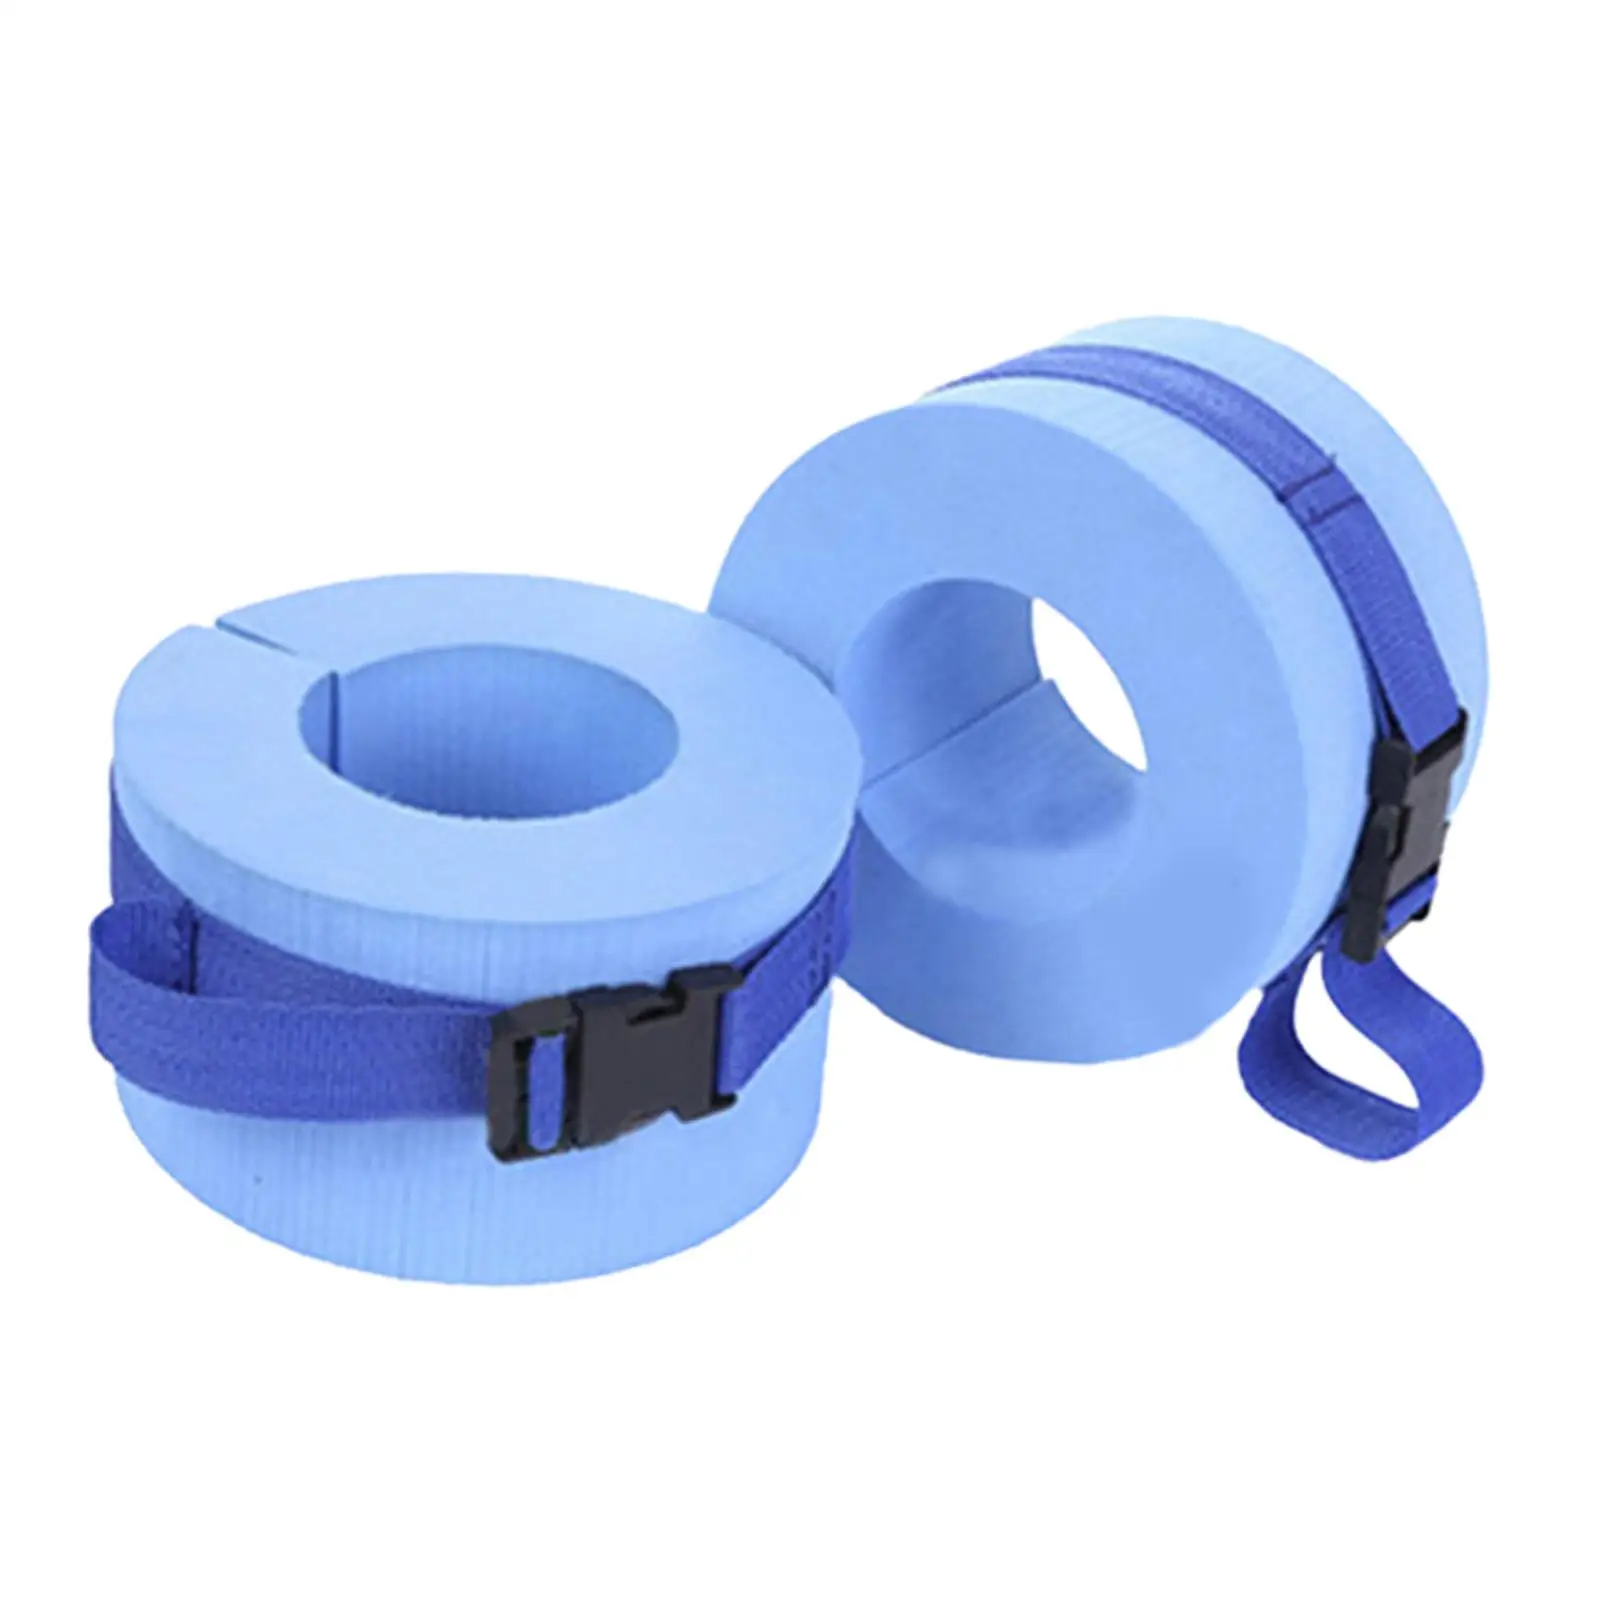 2x Swim Aquatic Cuffs Floaties Device Waterproof Pool Exercise Training Aid Swim